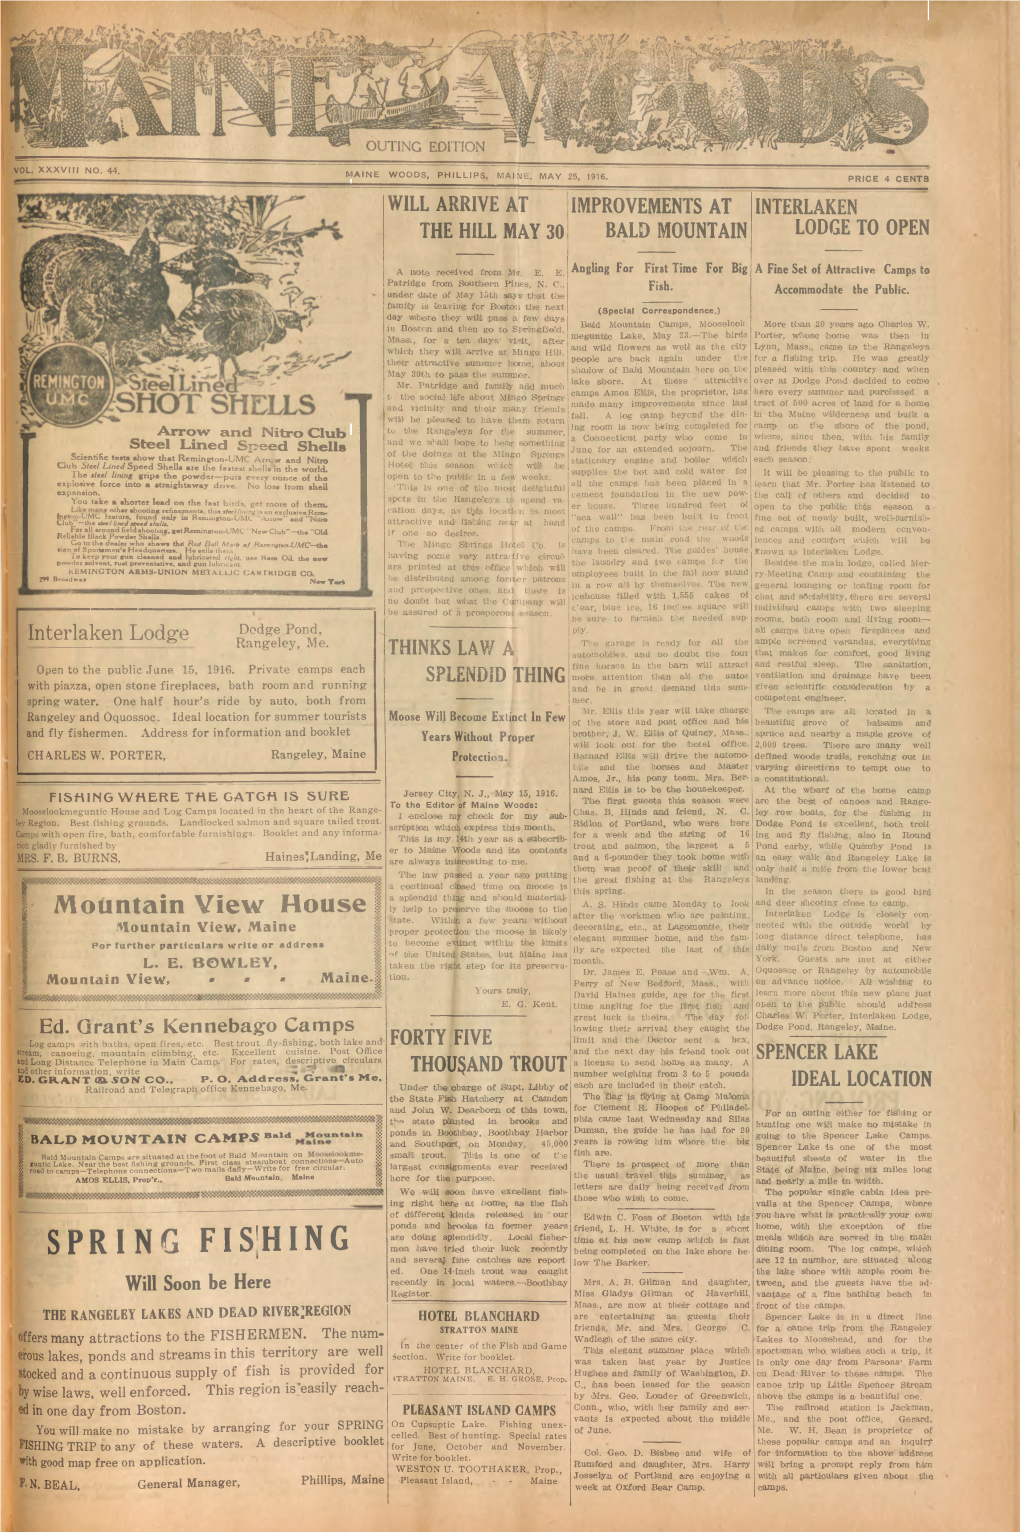 Maine Woods, Phillips, Maine-:, May 25, 1916